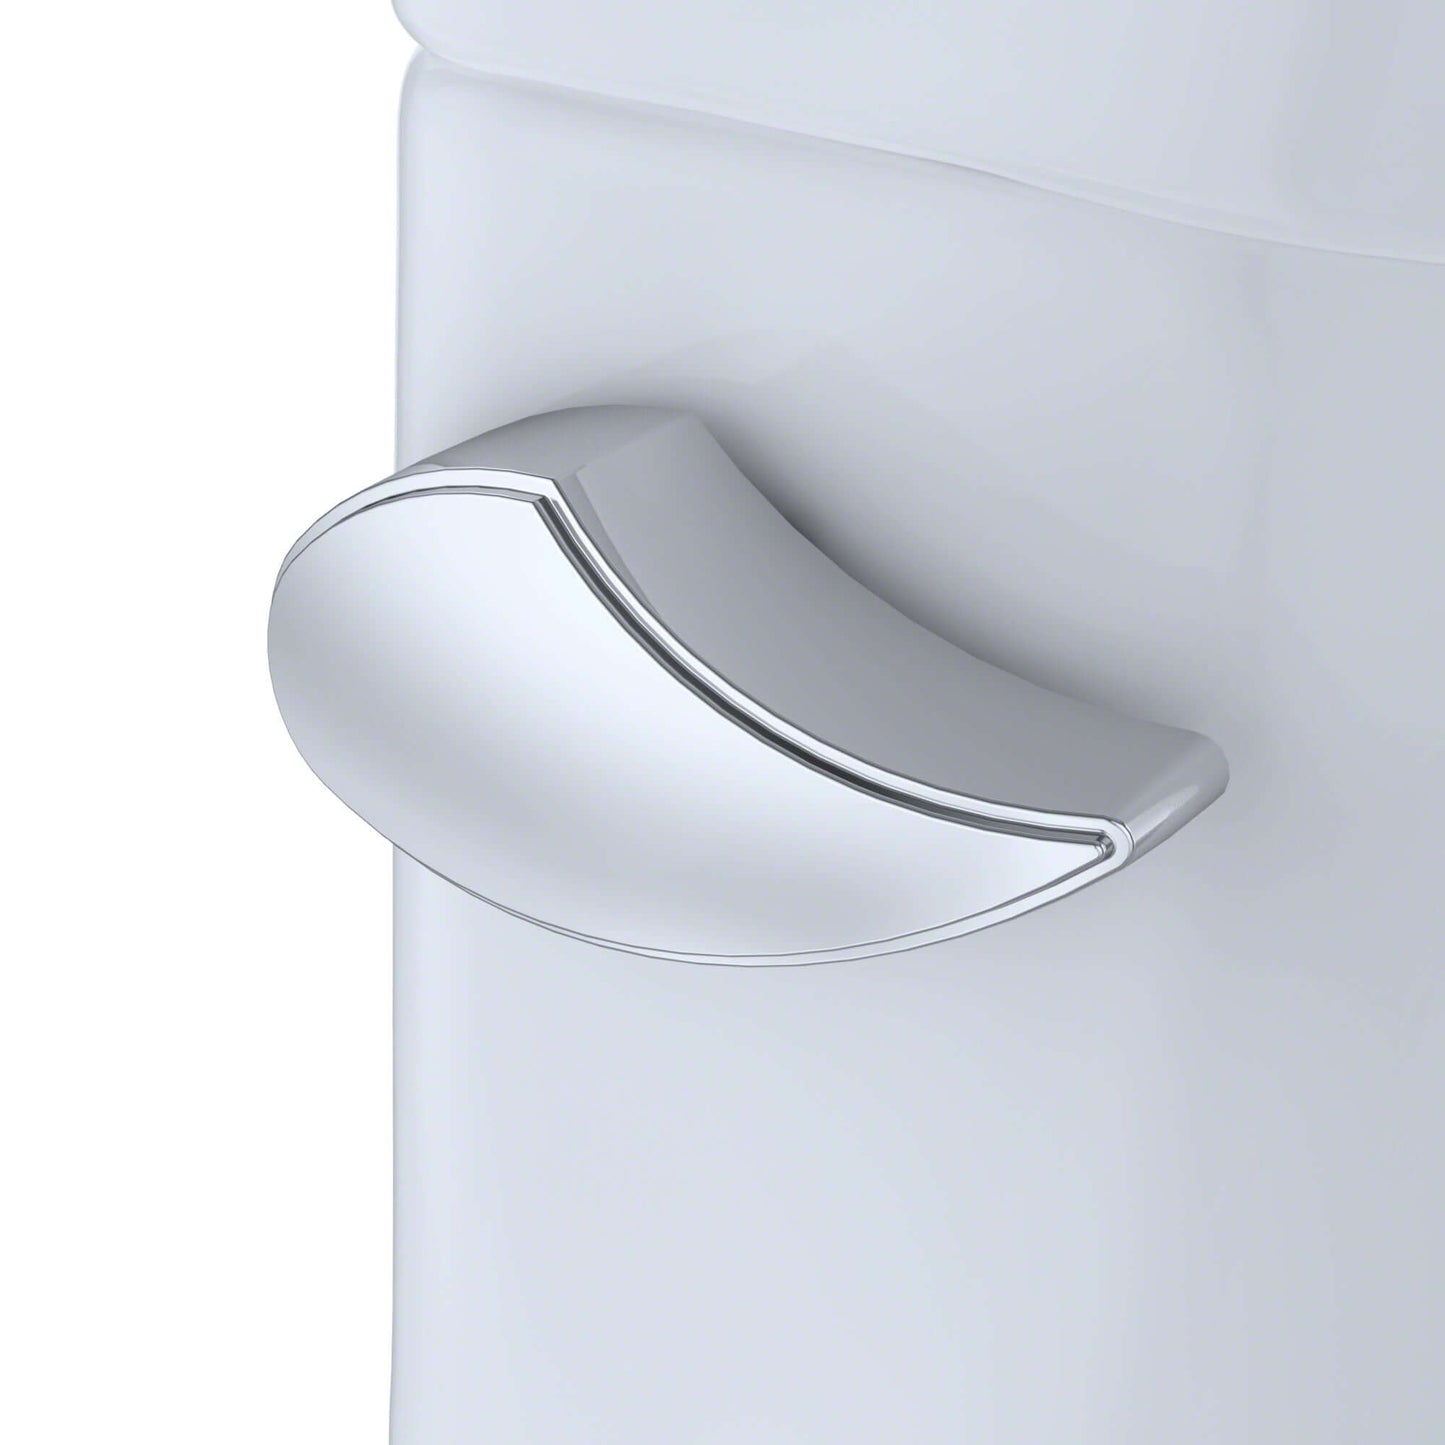 TOTO WASHLET+ Drake II Two-Piece Elongated 1.28 GPF Universal Height Toilet with C2 Bidet Seat - MW4543074CEFG#01